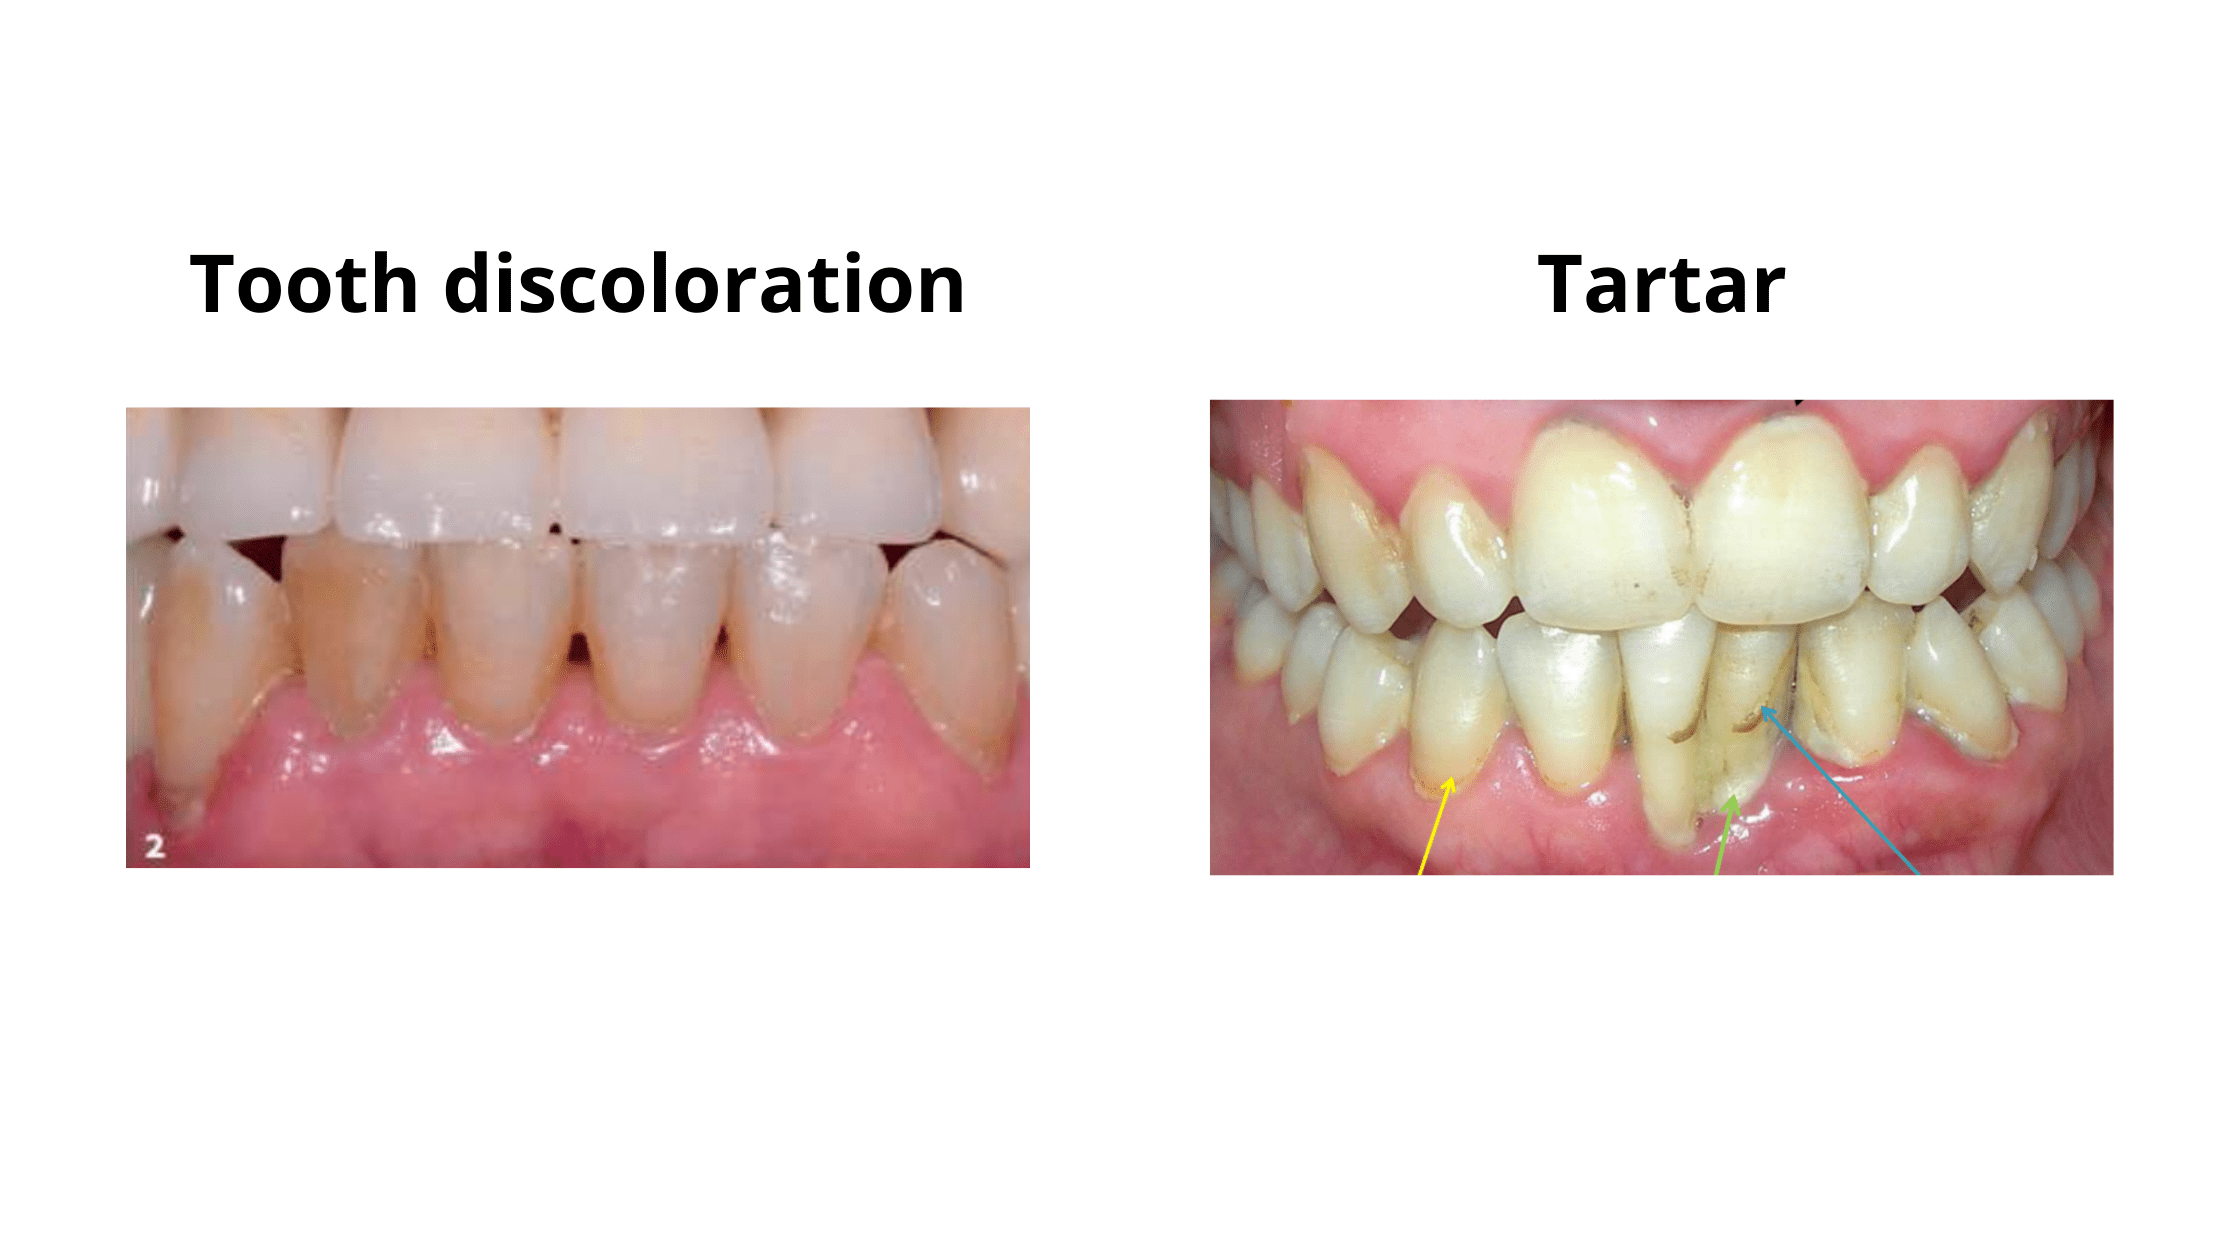 Black tartar vs. black discoloration